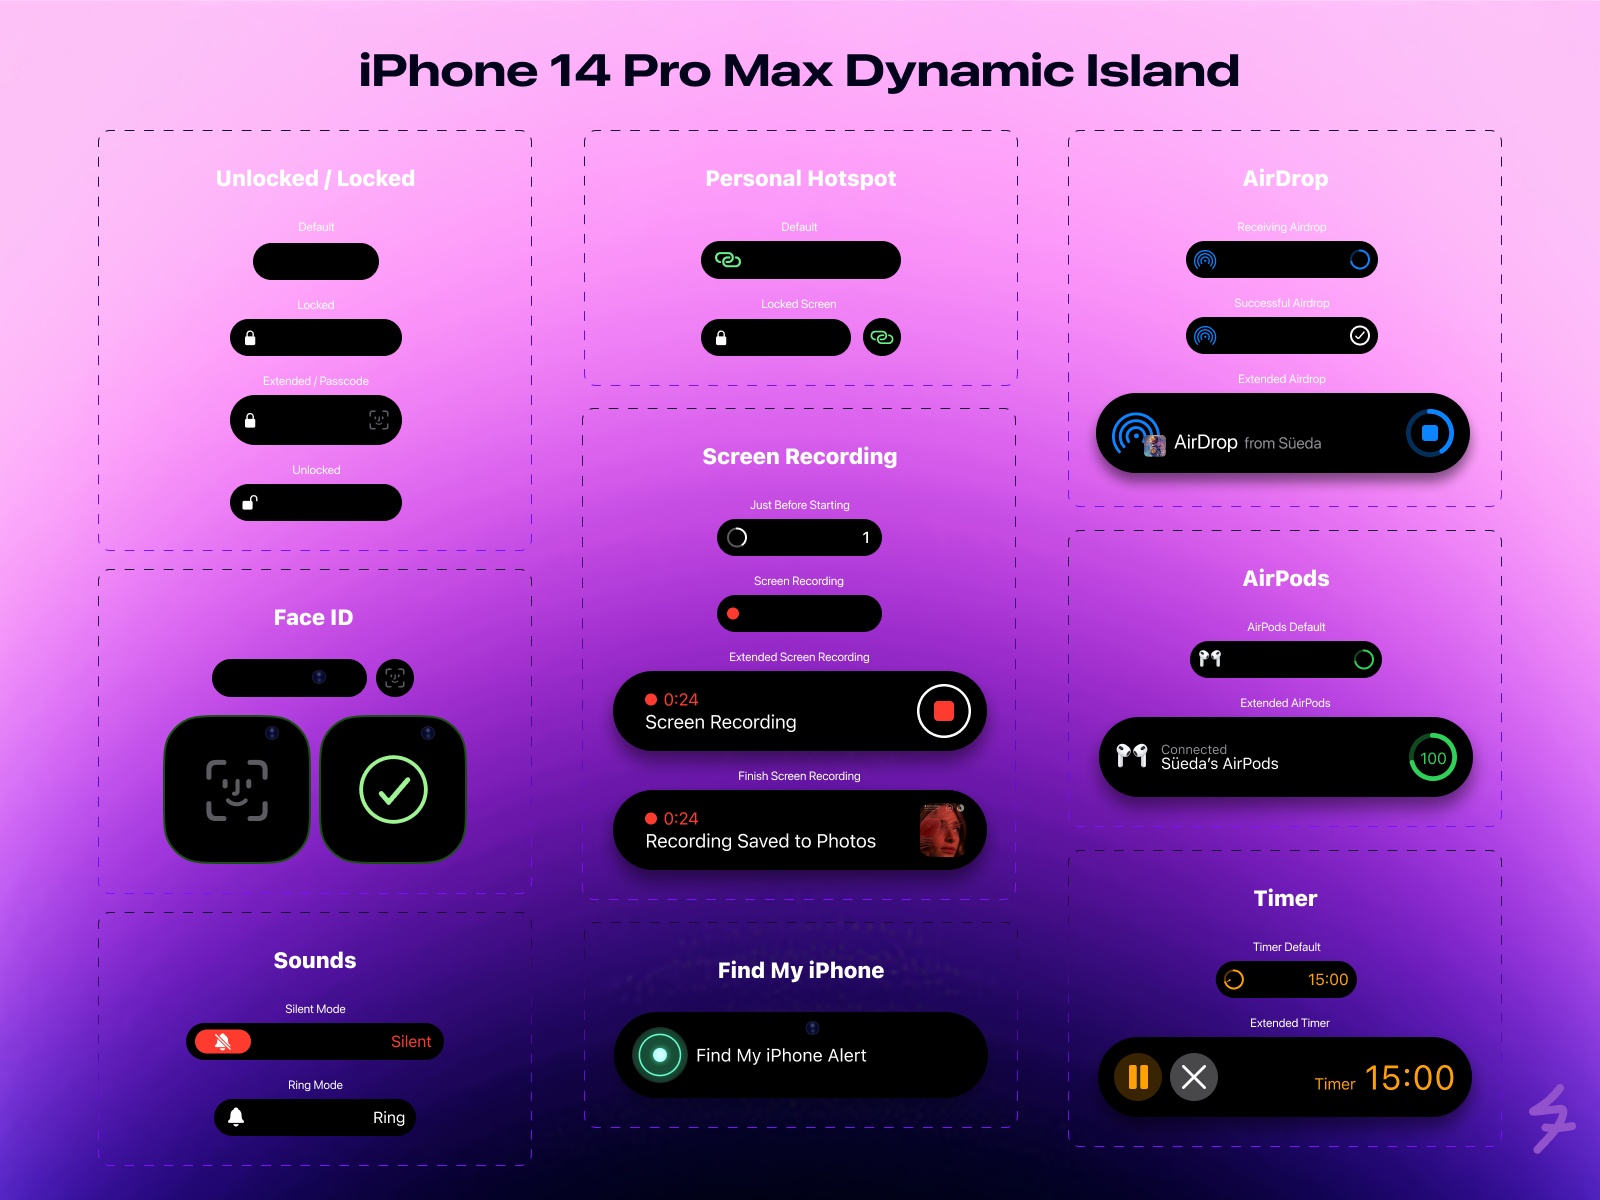 Dynamic max. Обои для iphone 14 Pro для Dynamic Island. Обои для динамик Айленд. Обои с Dynamic Island iphone. Iphone 15 Pro Dynamic Island.